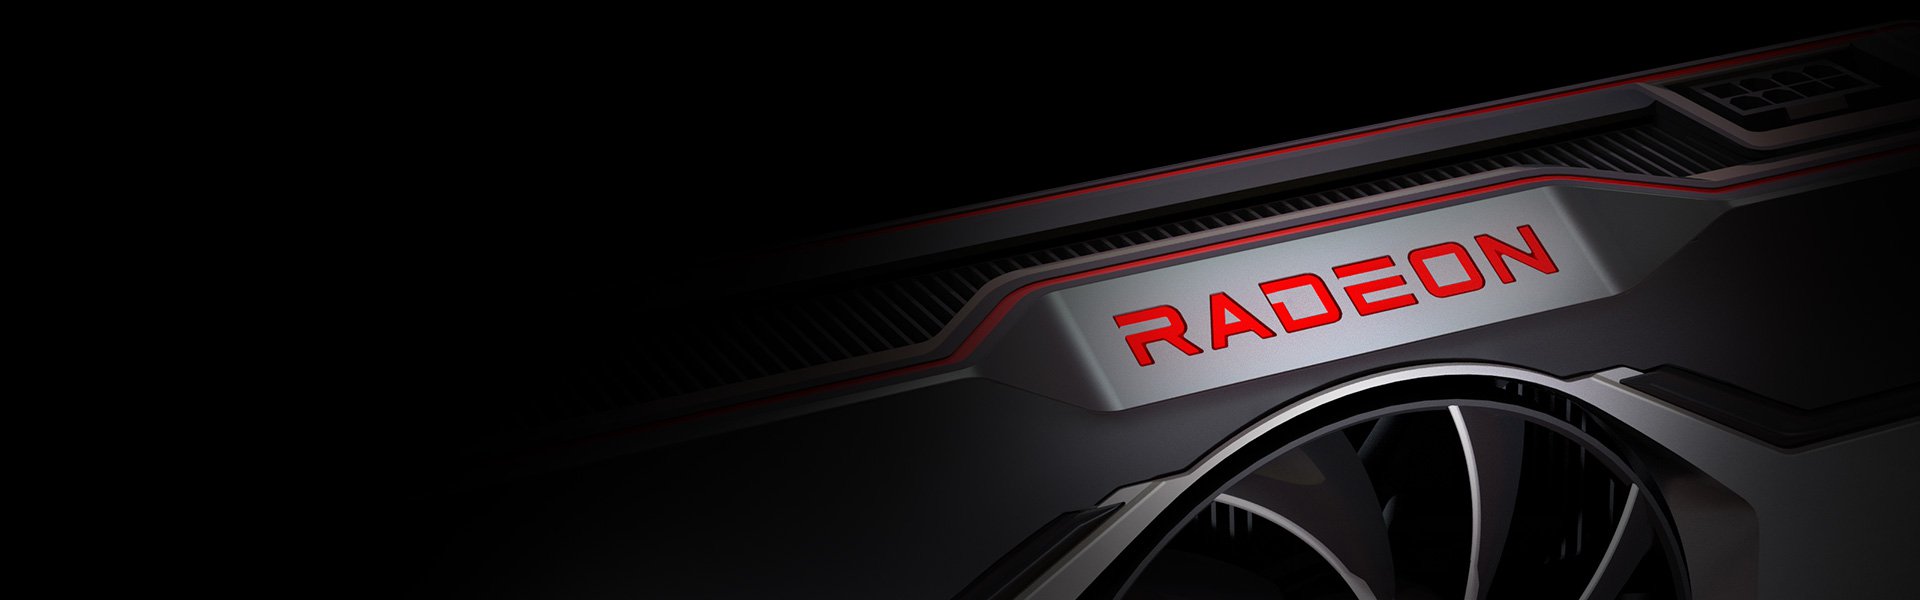 ASRock > AMD Radeon™ RX 6600 Challenger D 8GB